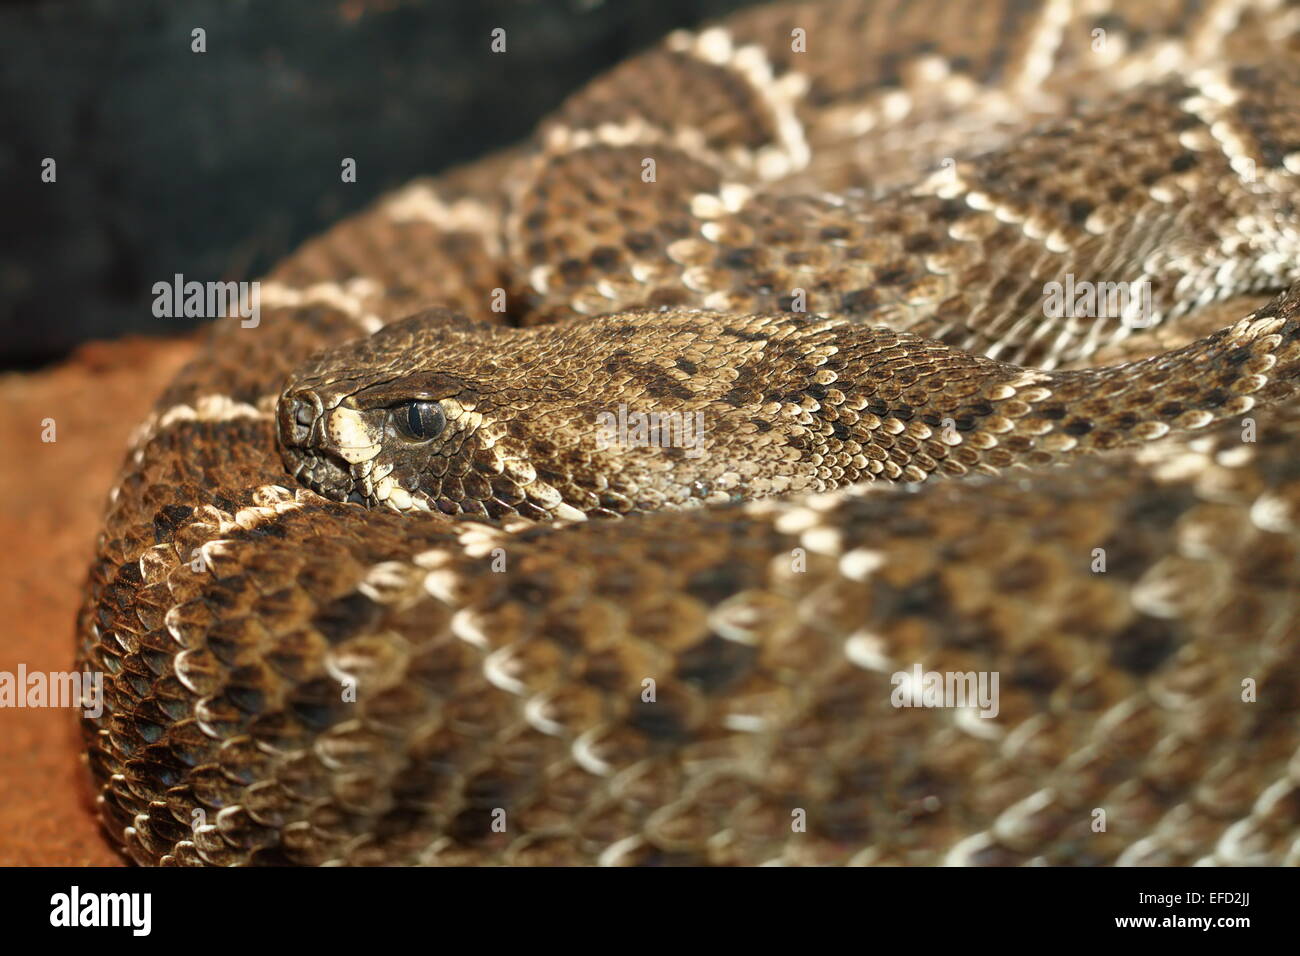 western diamondback rattlesnake shoving its camouflage pattern on skin in a terrarium Stock Photo